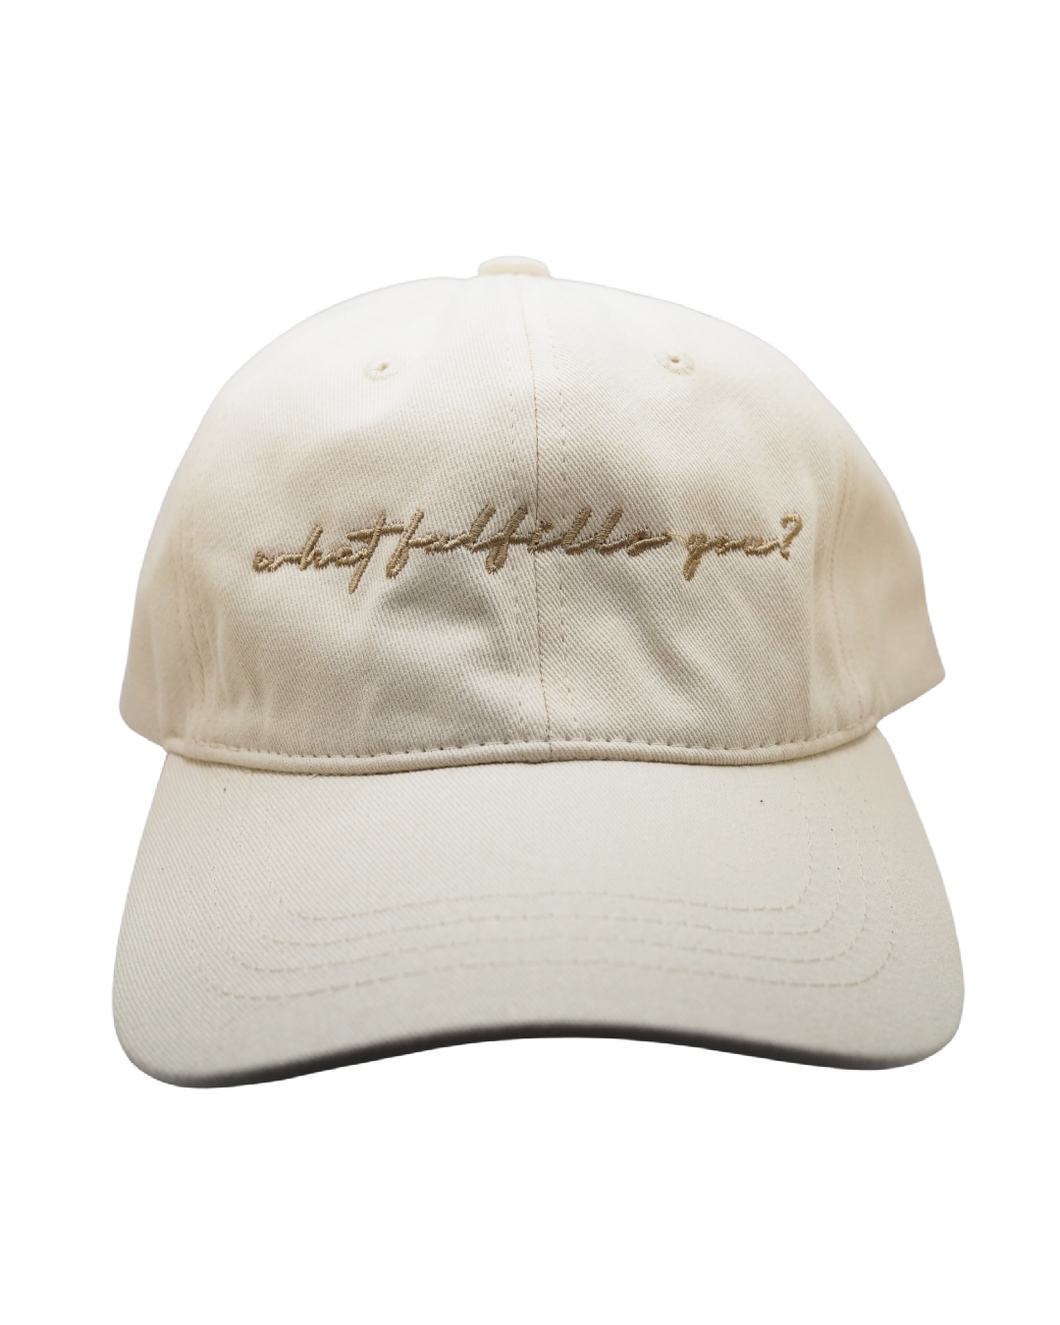 What Fulfills You? Minimal Chic Baseball Hat - Cream